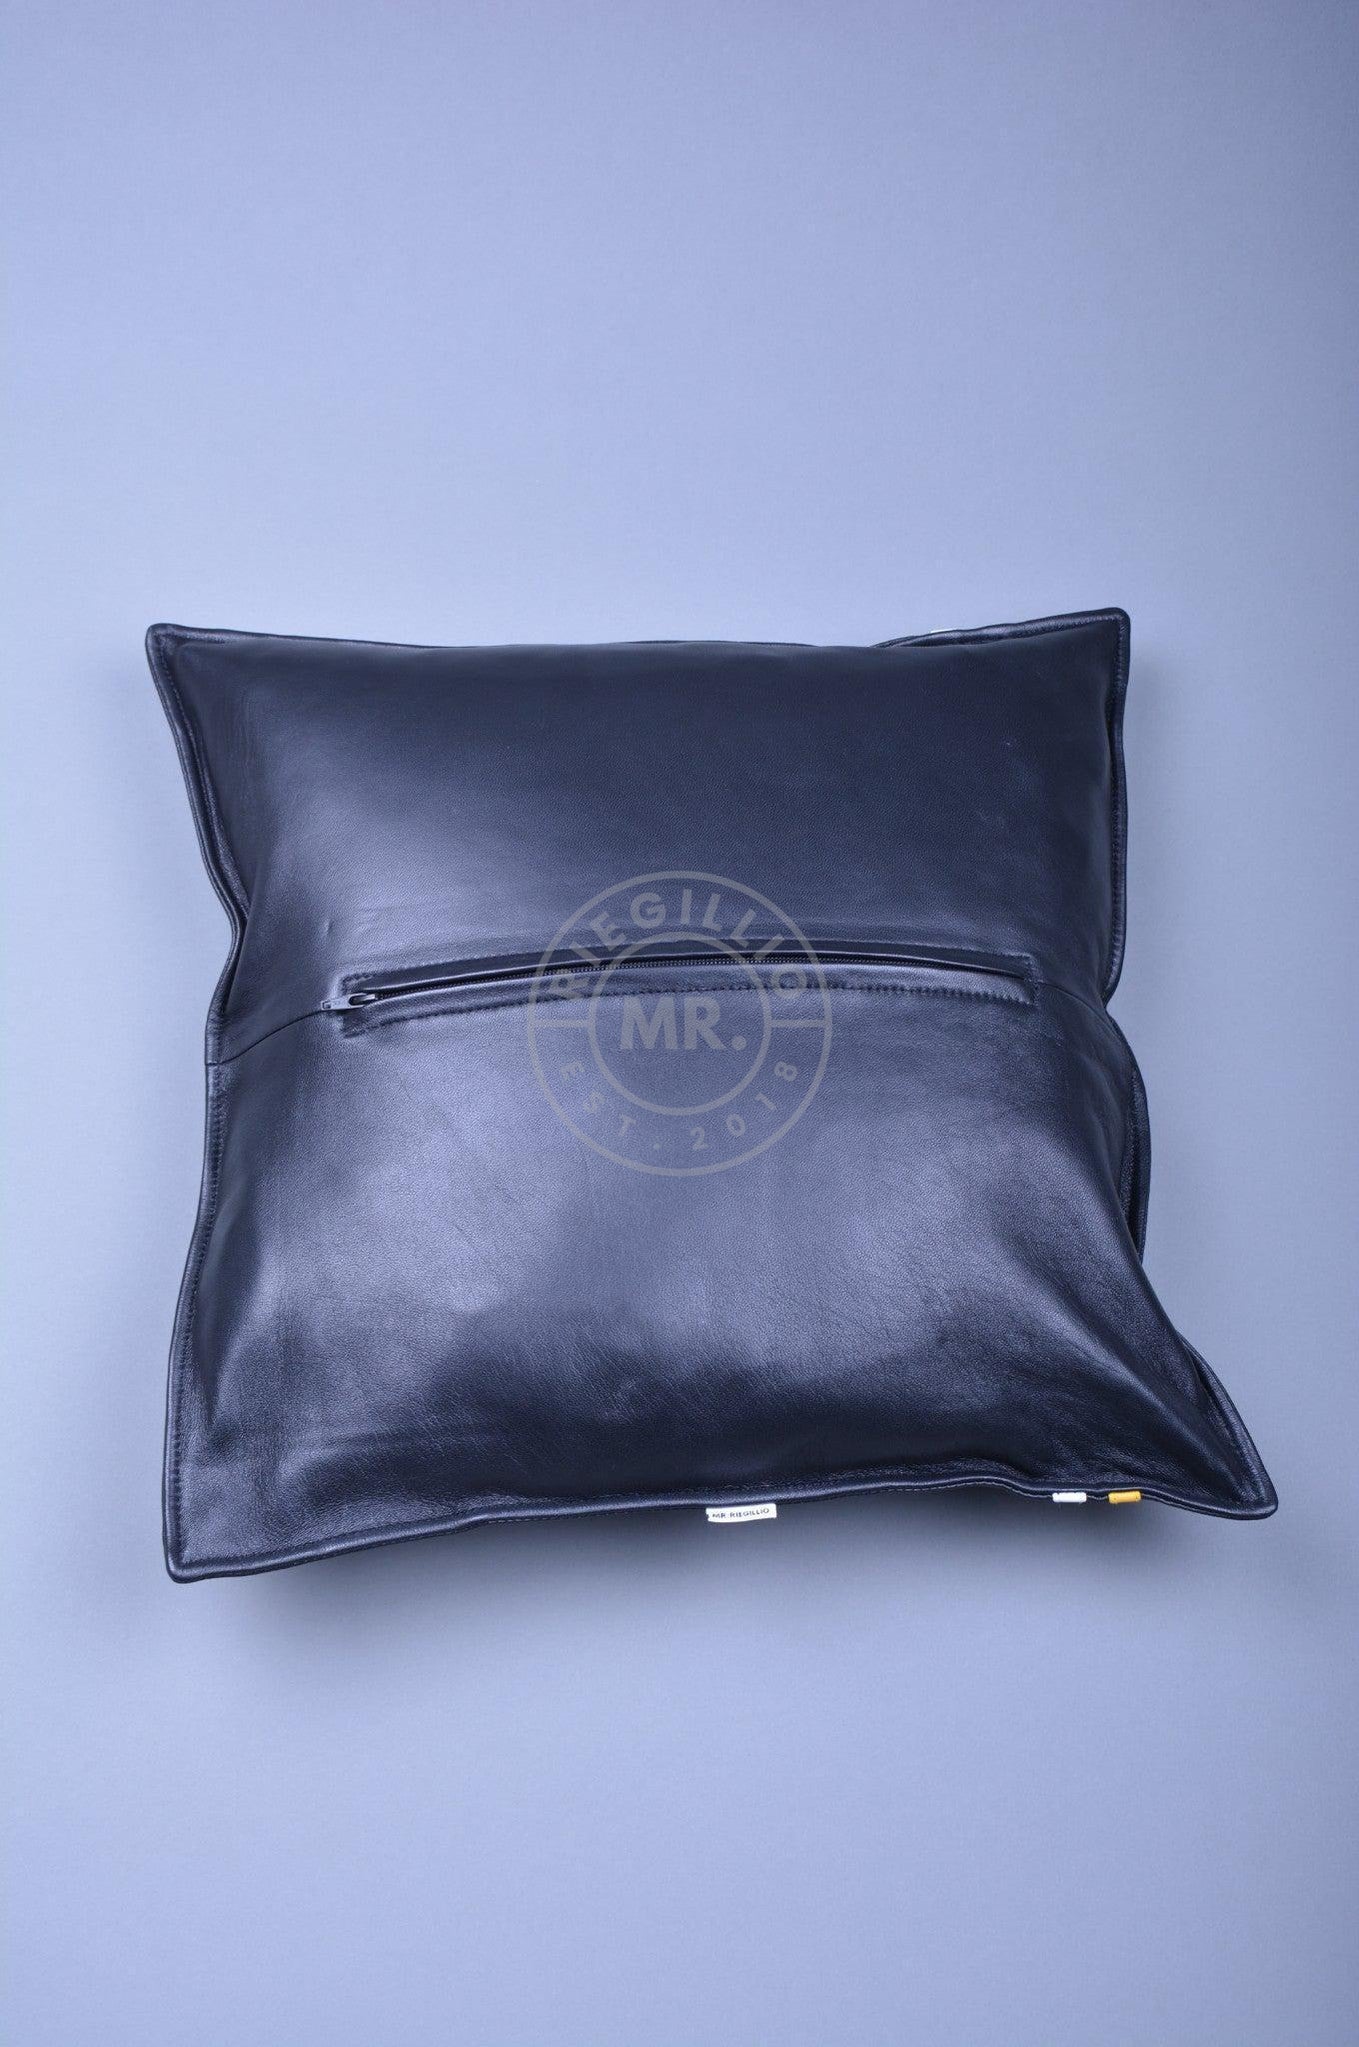 Black Leather Pillow - Jeans Blue Stripe-at MR. Riegillio